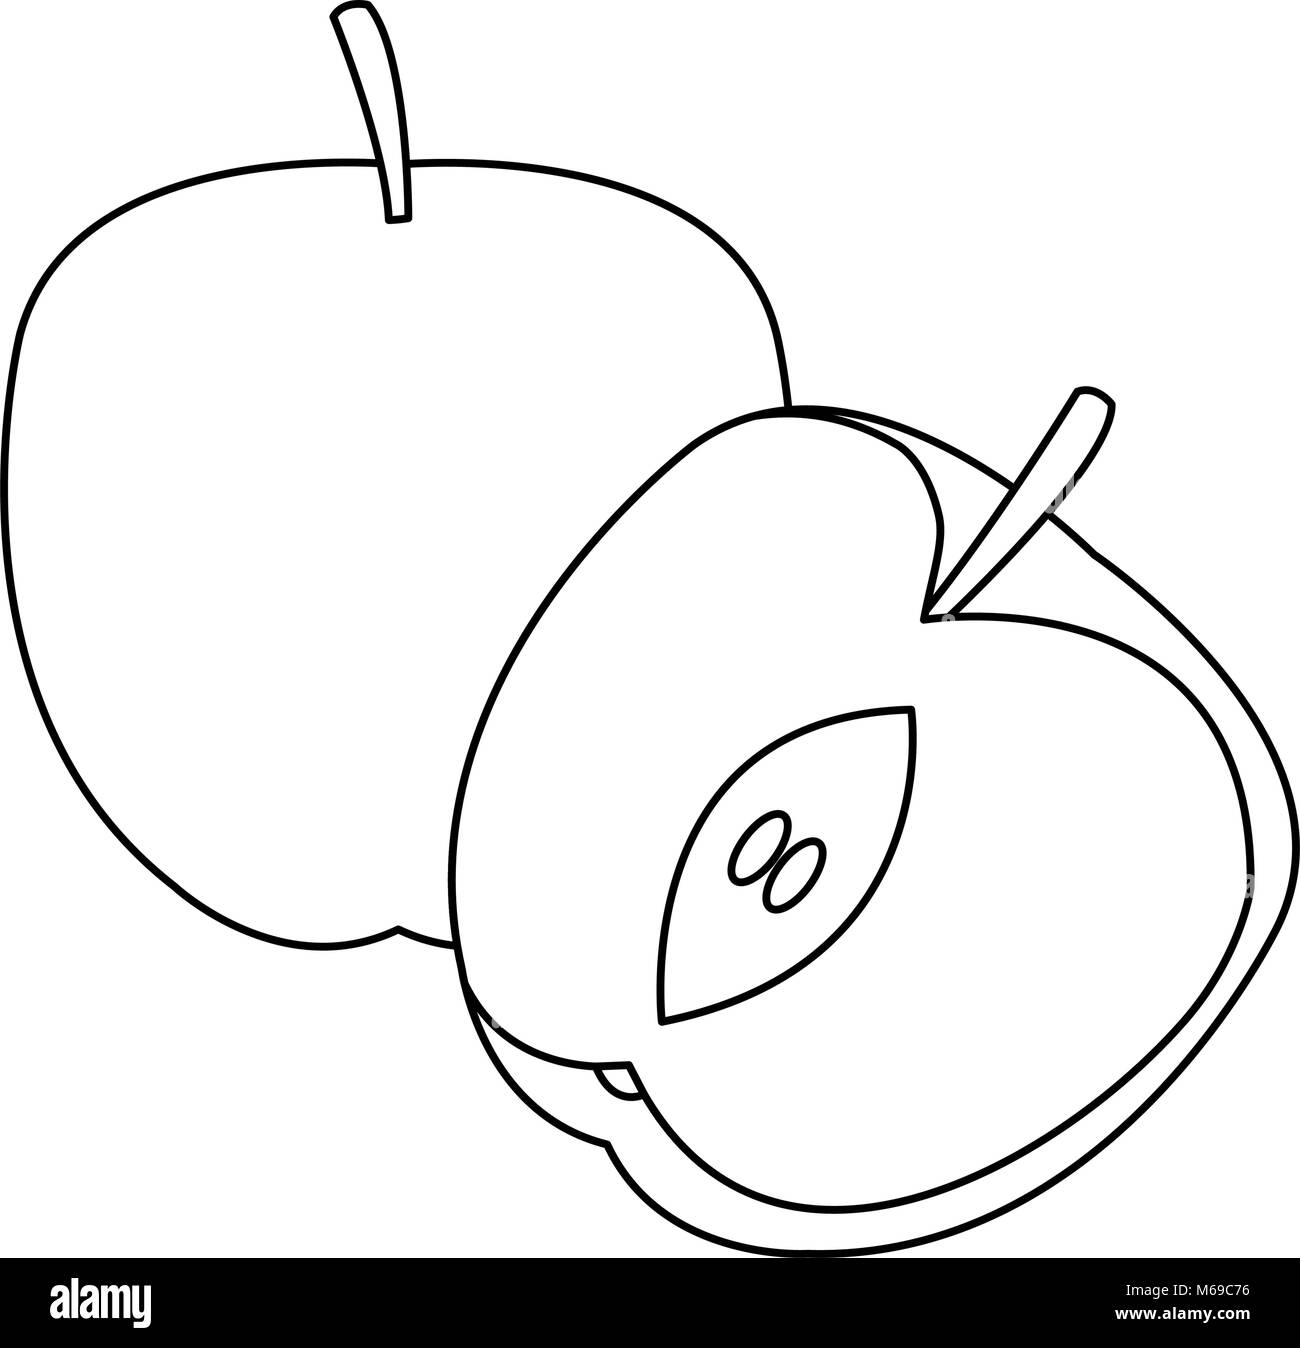 Apples fruits cartoon Stock Vector